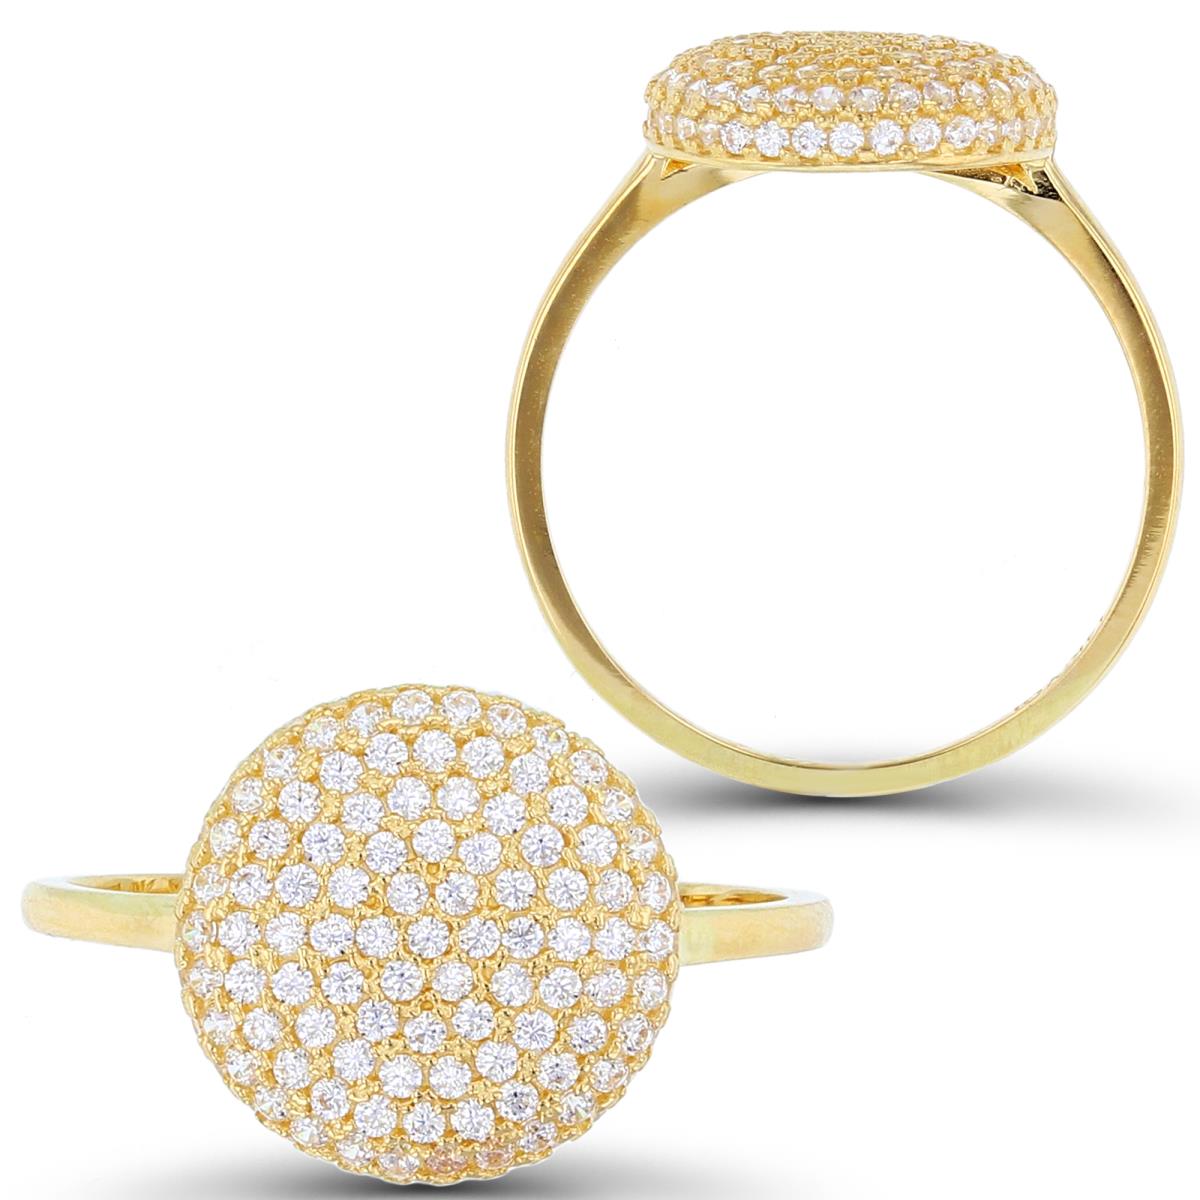 10K Yellow Gold Micropaved Circle Fashion Ring